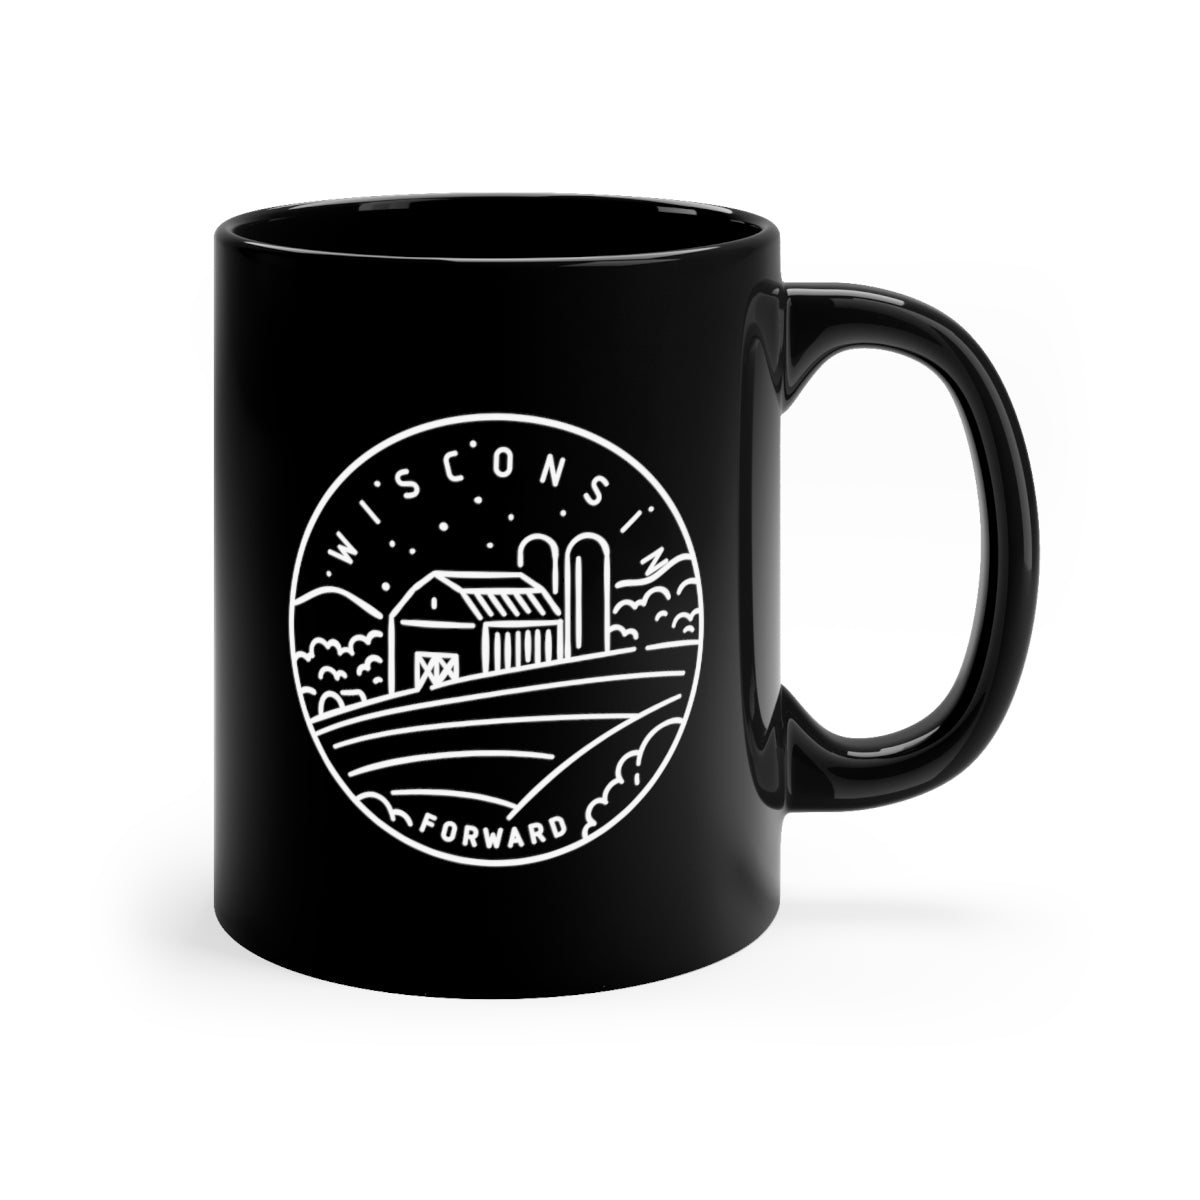 State of Wisconsin Ceramic Mug - The Northwest Store